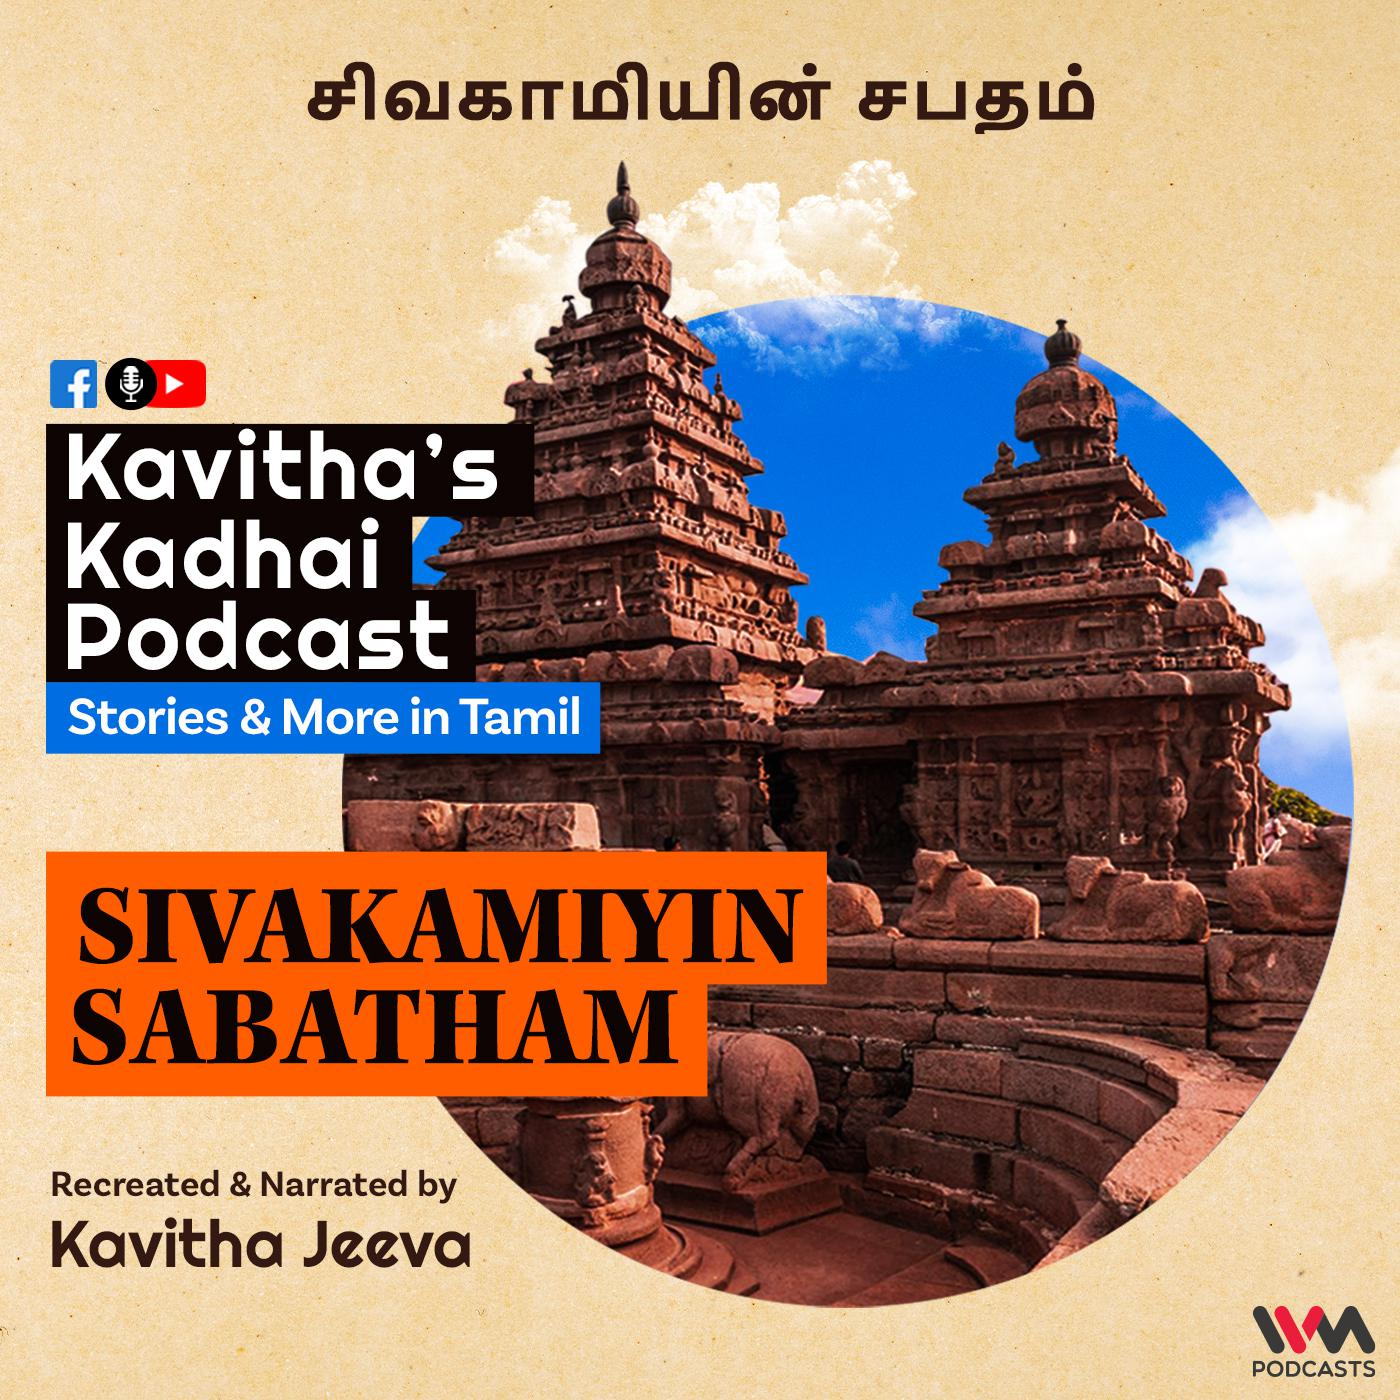 KadhaiPodcast's Sivakamiyin Sabatham with Kavitha Jeeva - Episode #113